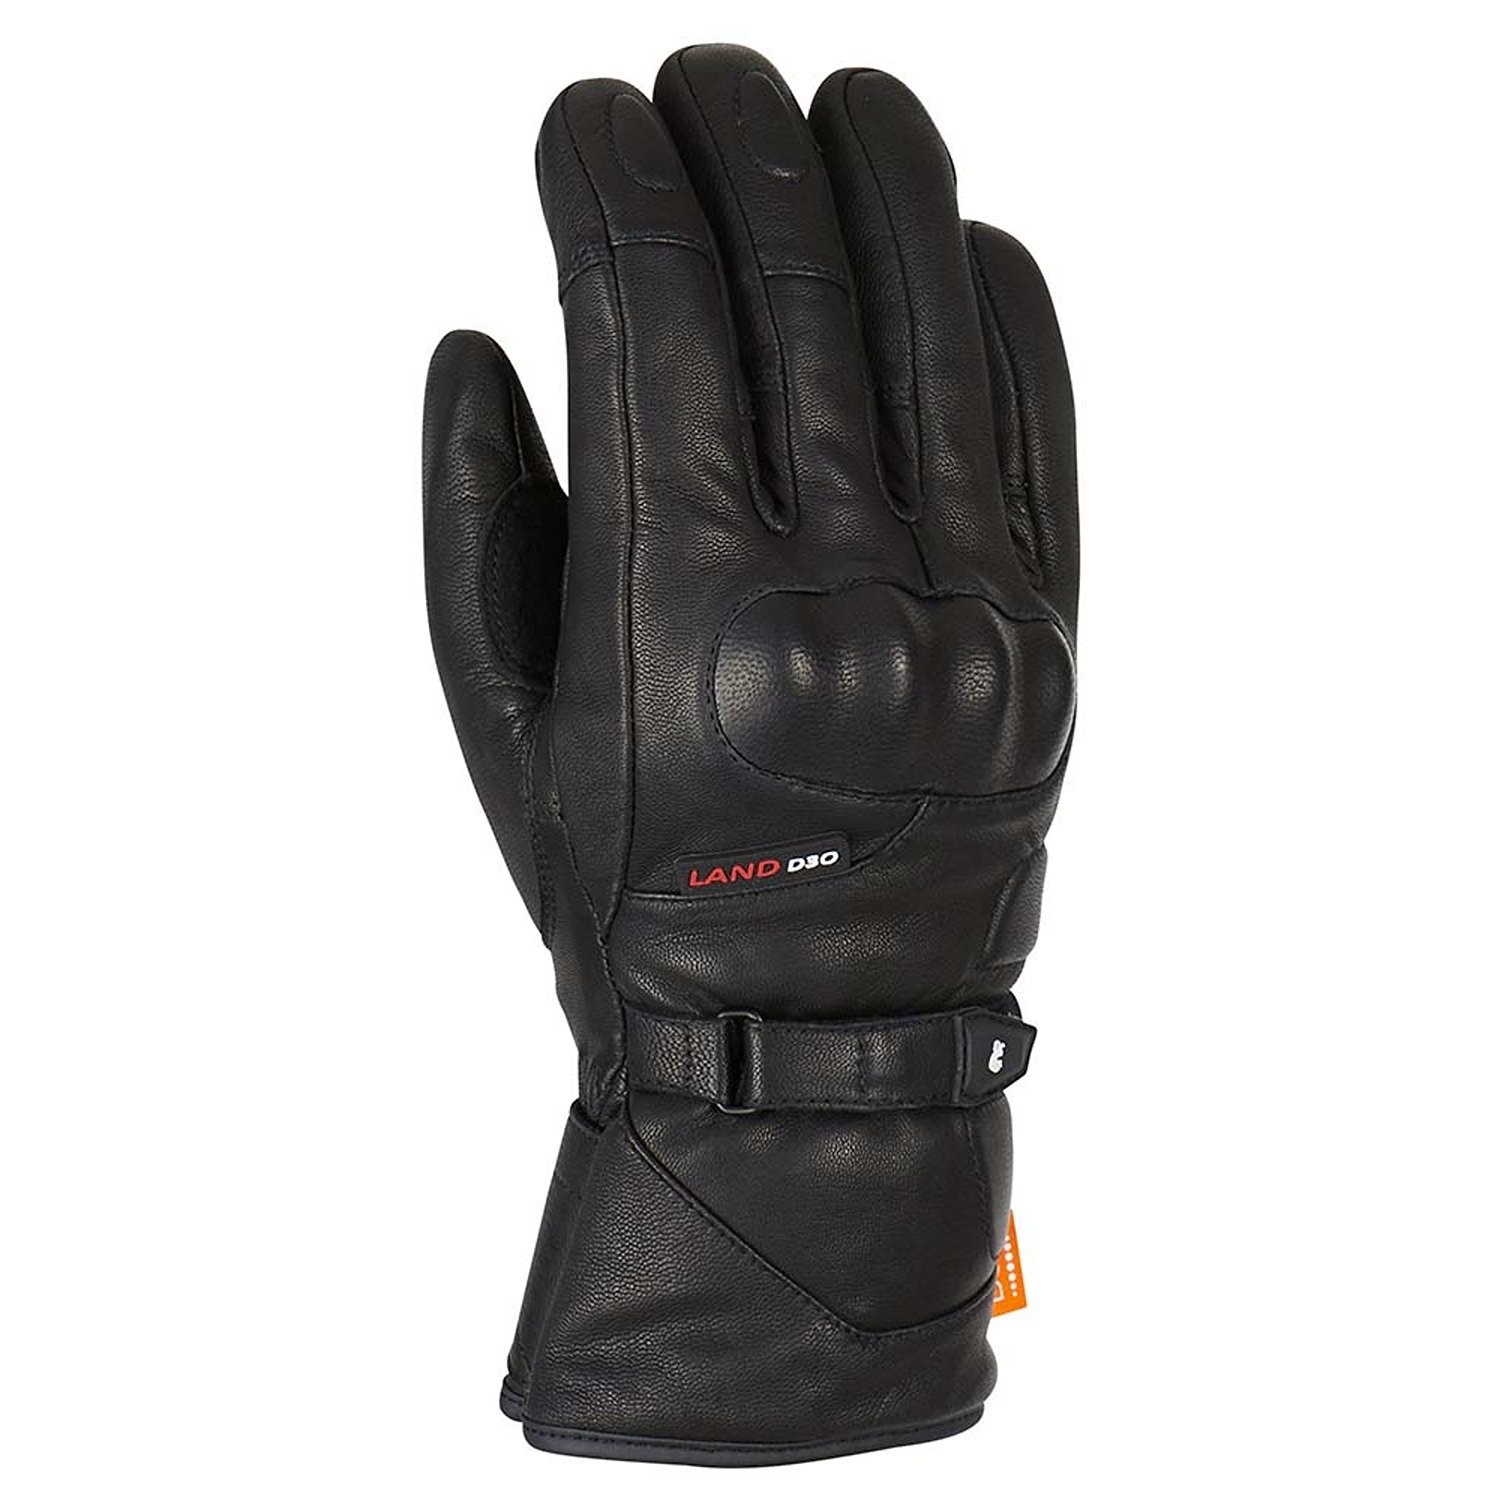 Image of Furygan Land DK D30 Gloves Black Size XL EN